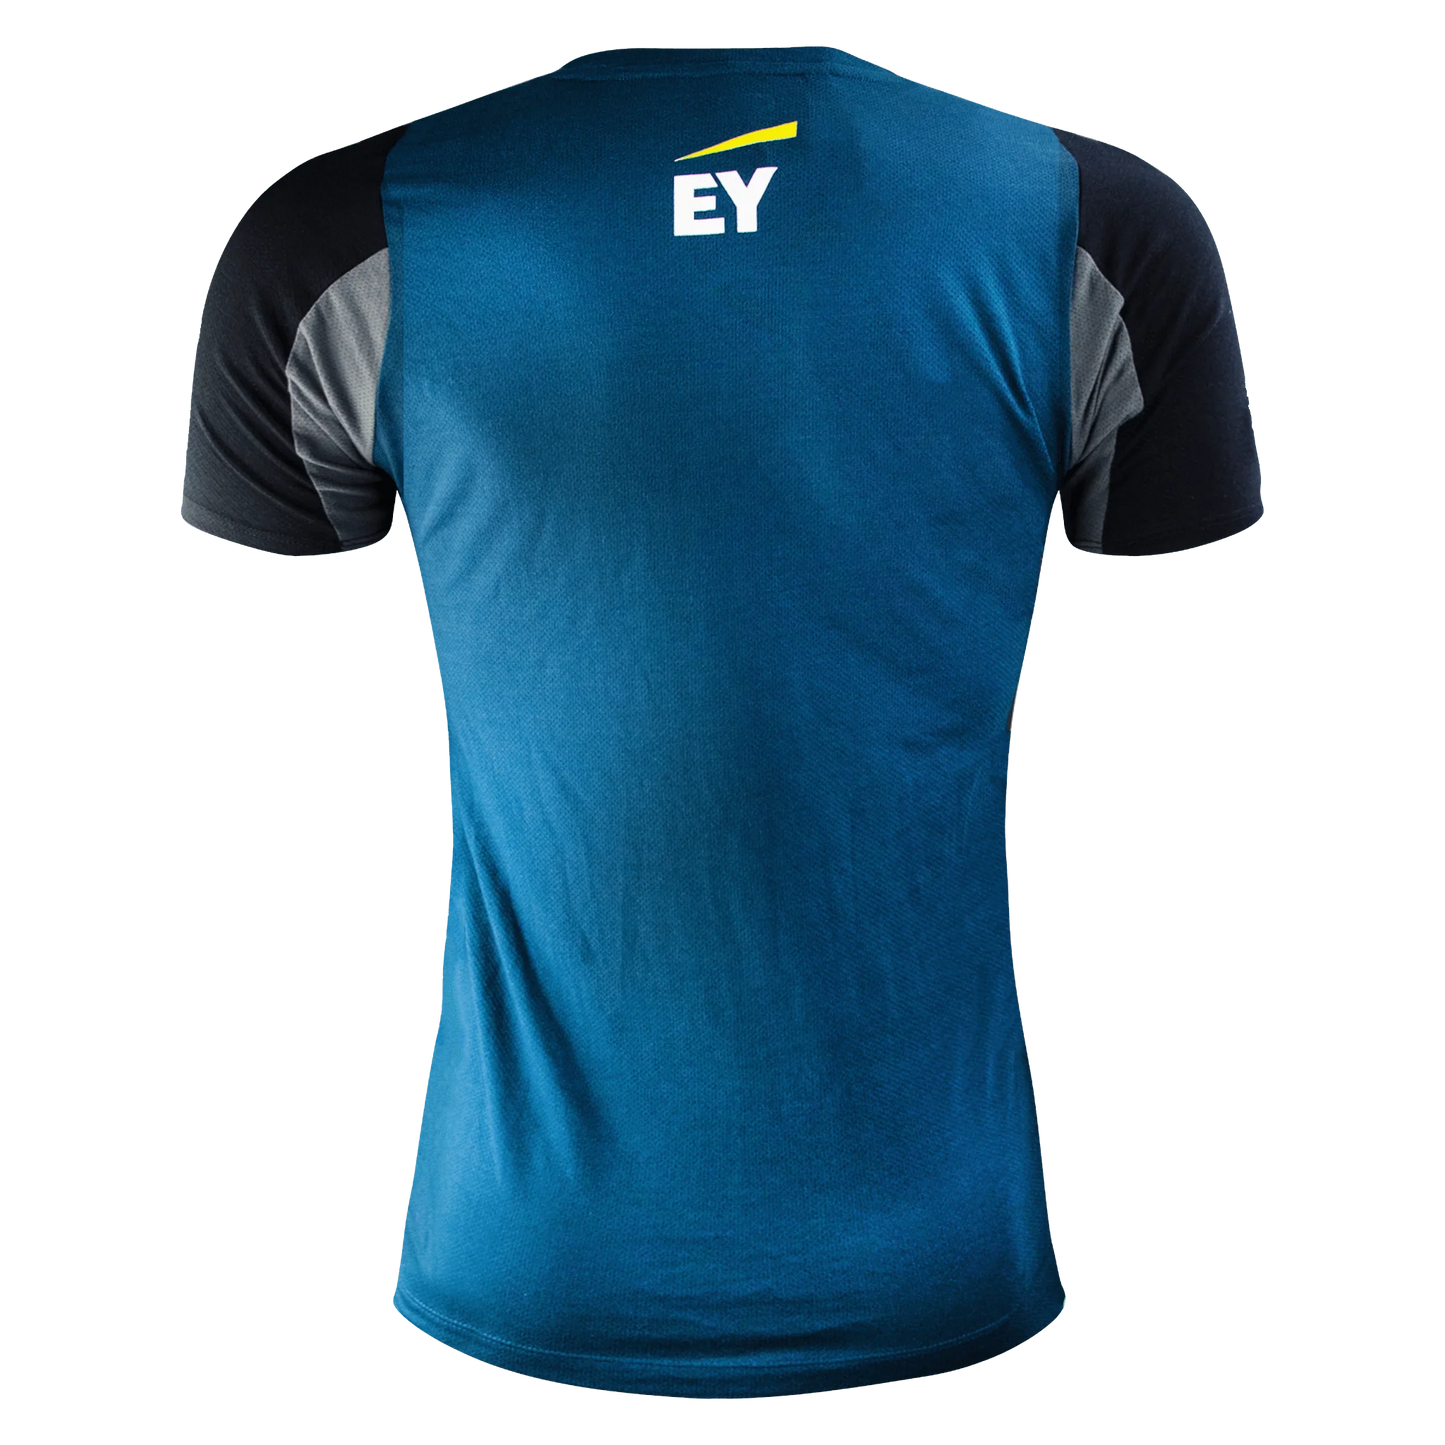 Canterbury USA Rugby Vapodri Cotton Training T-Shirt, Blue/Black